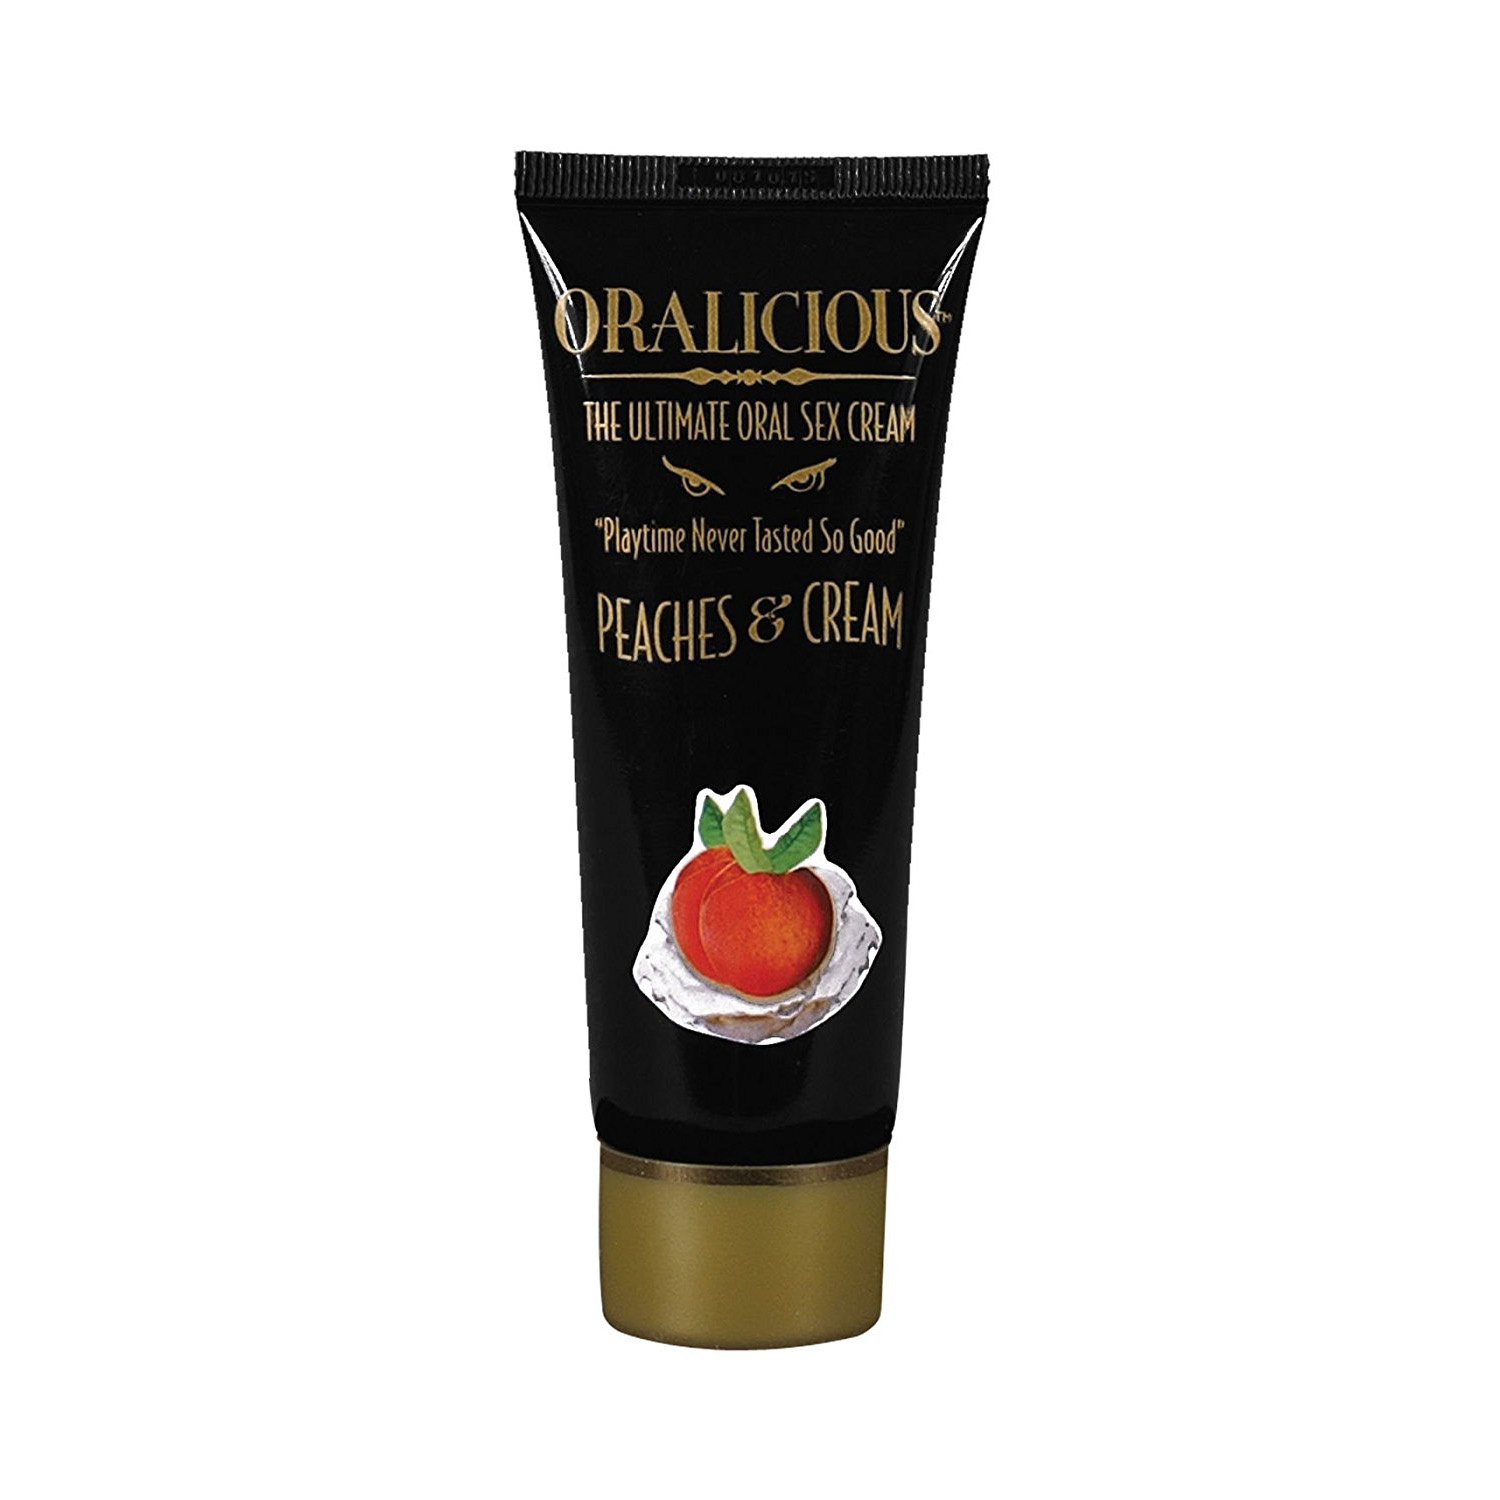 Oralicious Peaches and Cream Oral Sex Cream Boxview